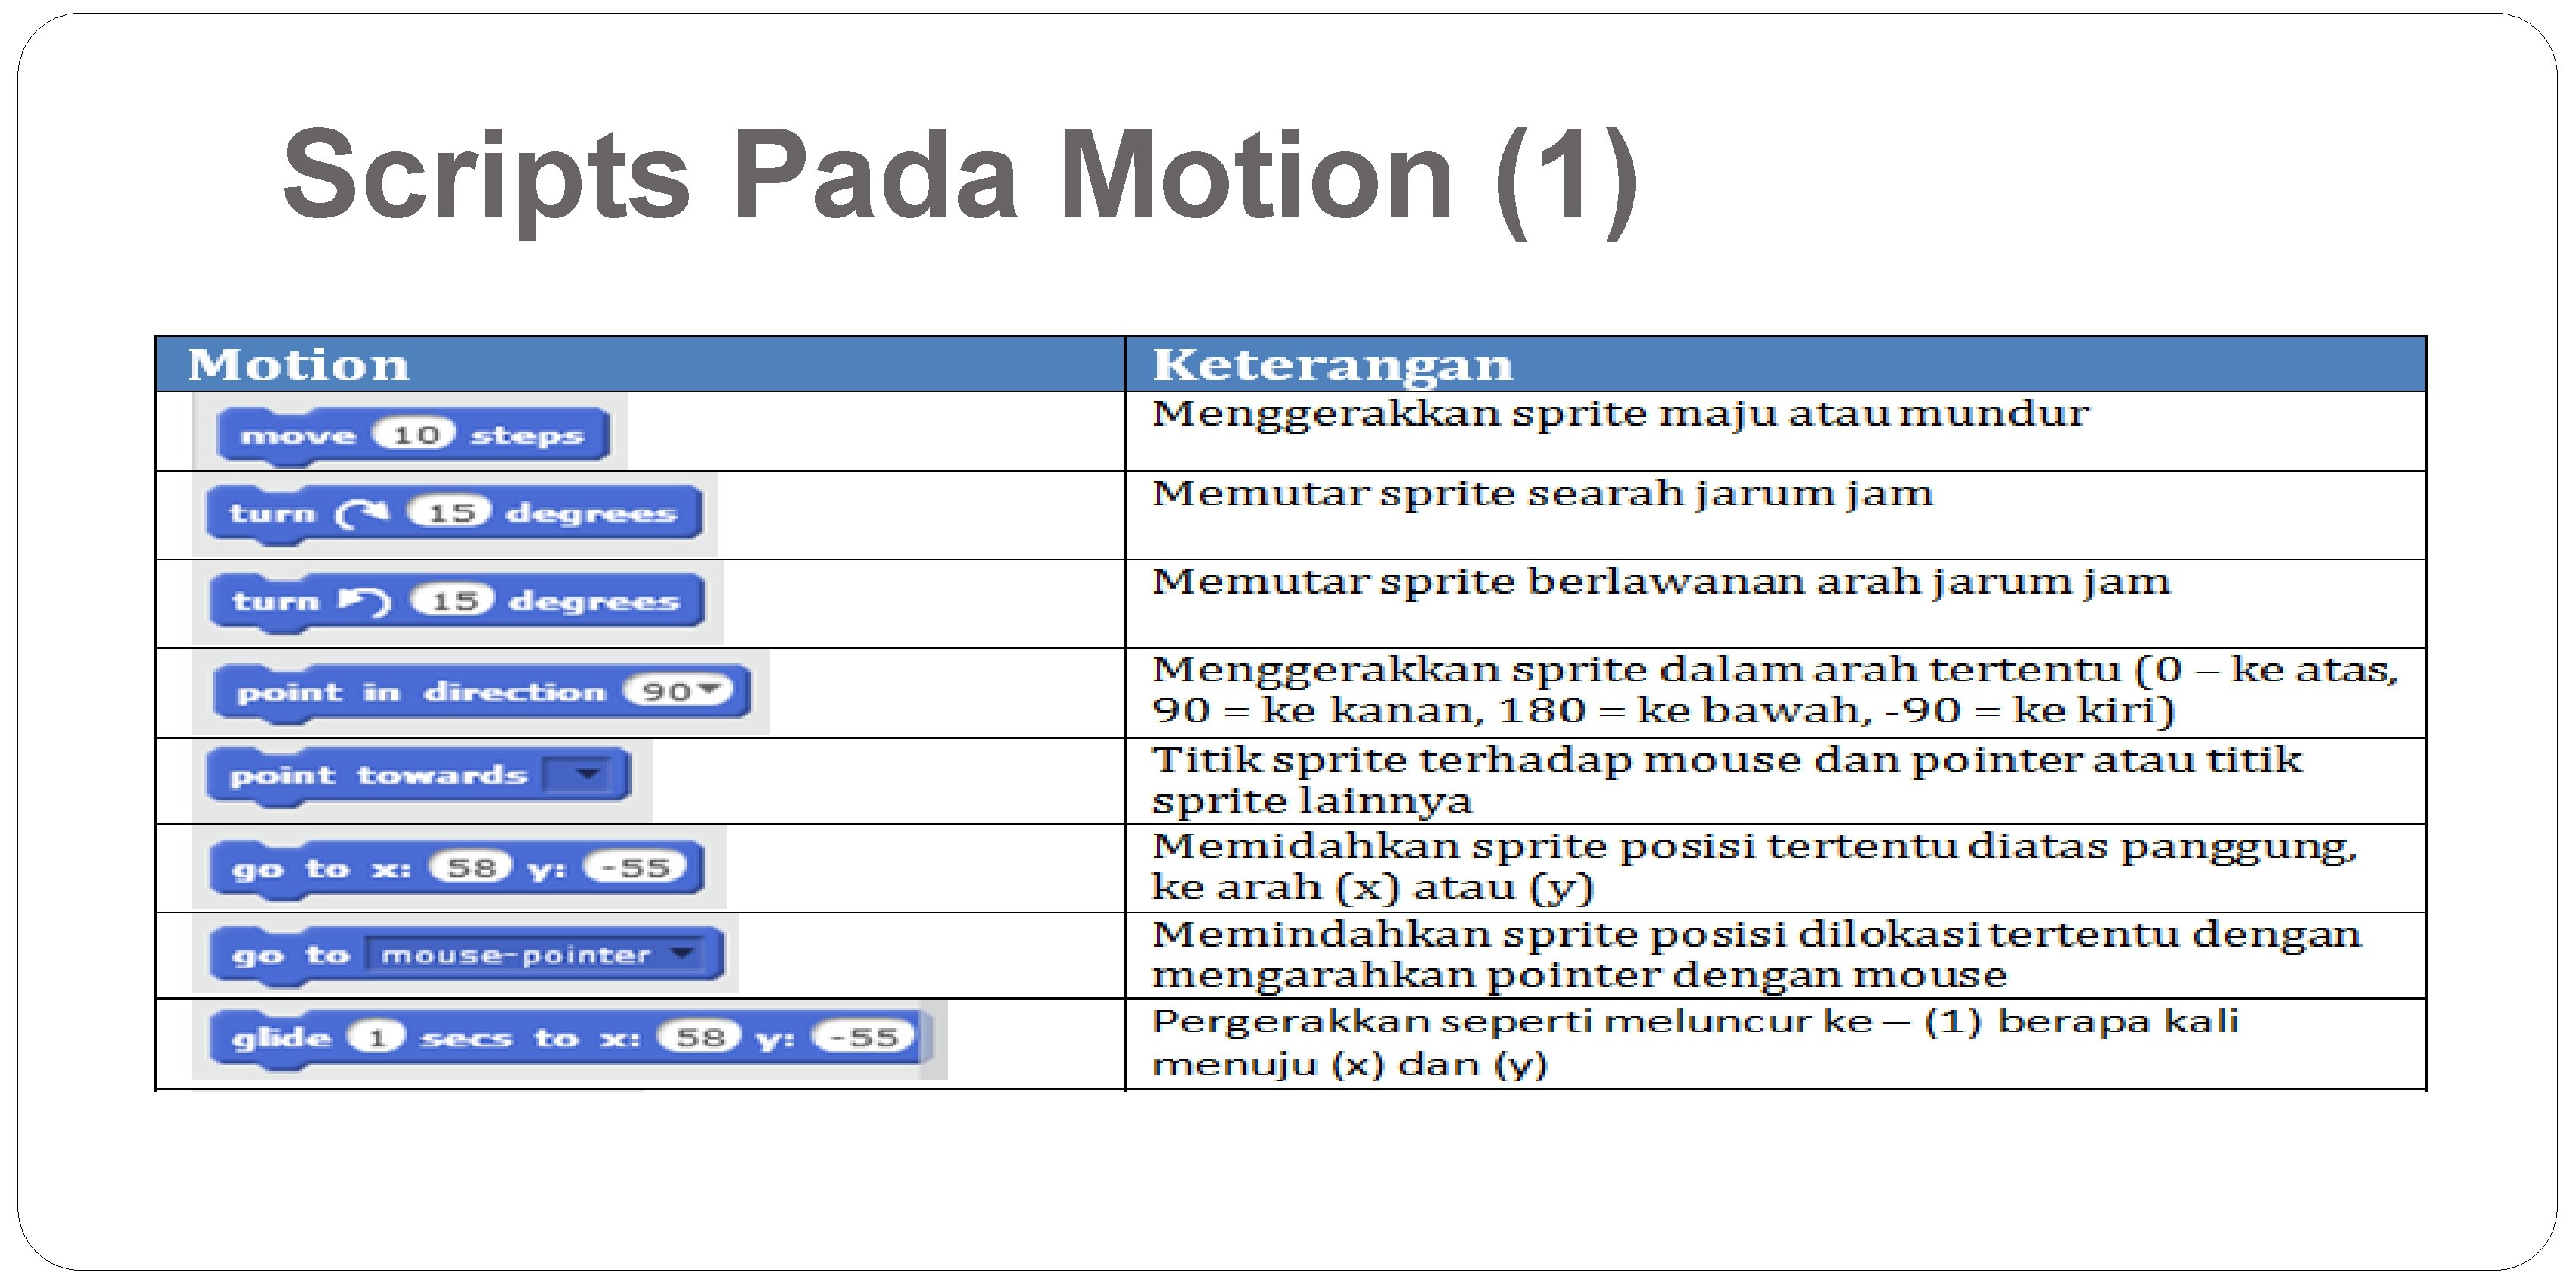 Scripts Pada Motion (1) 